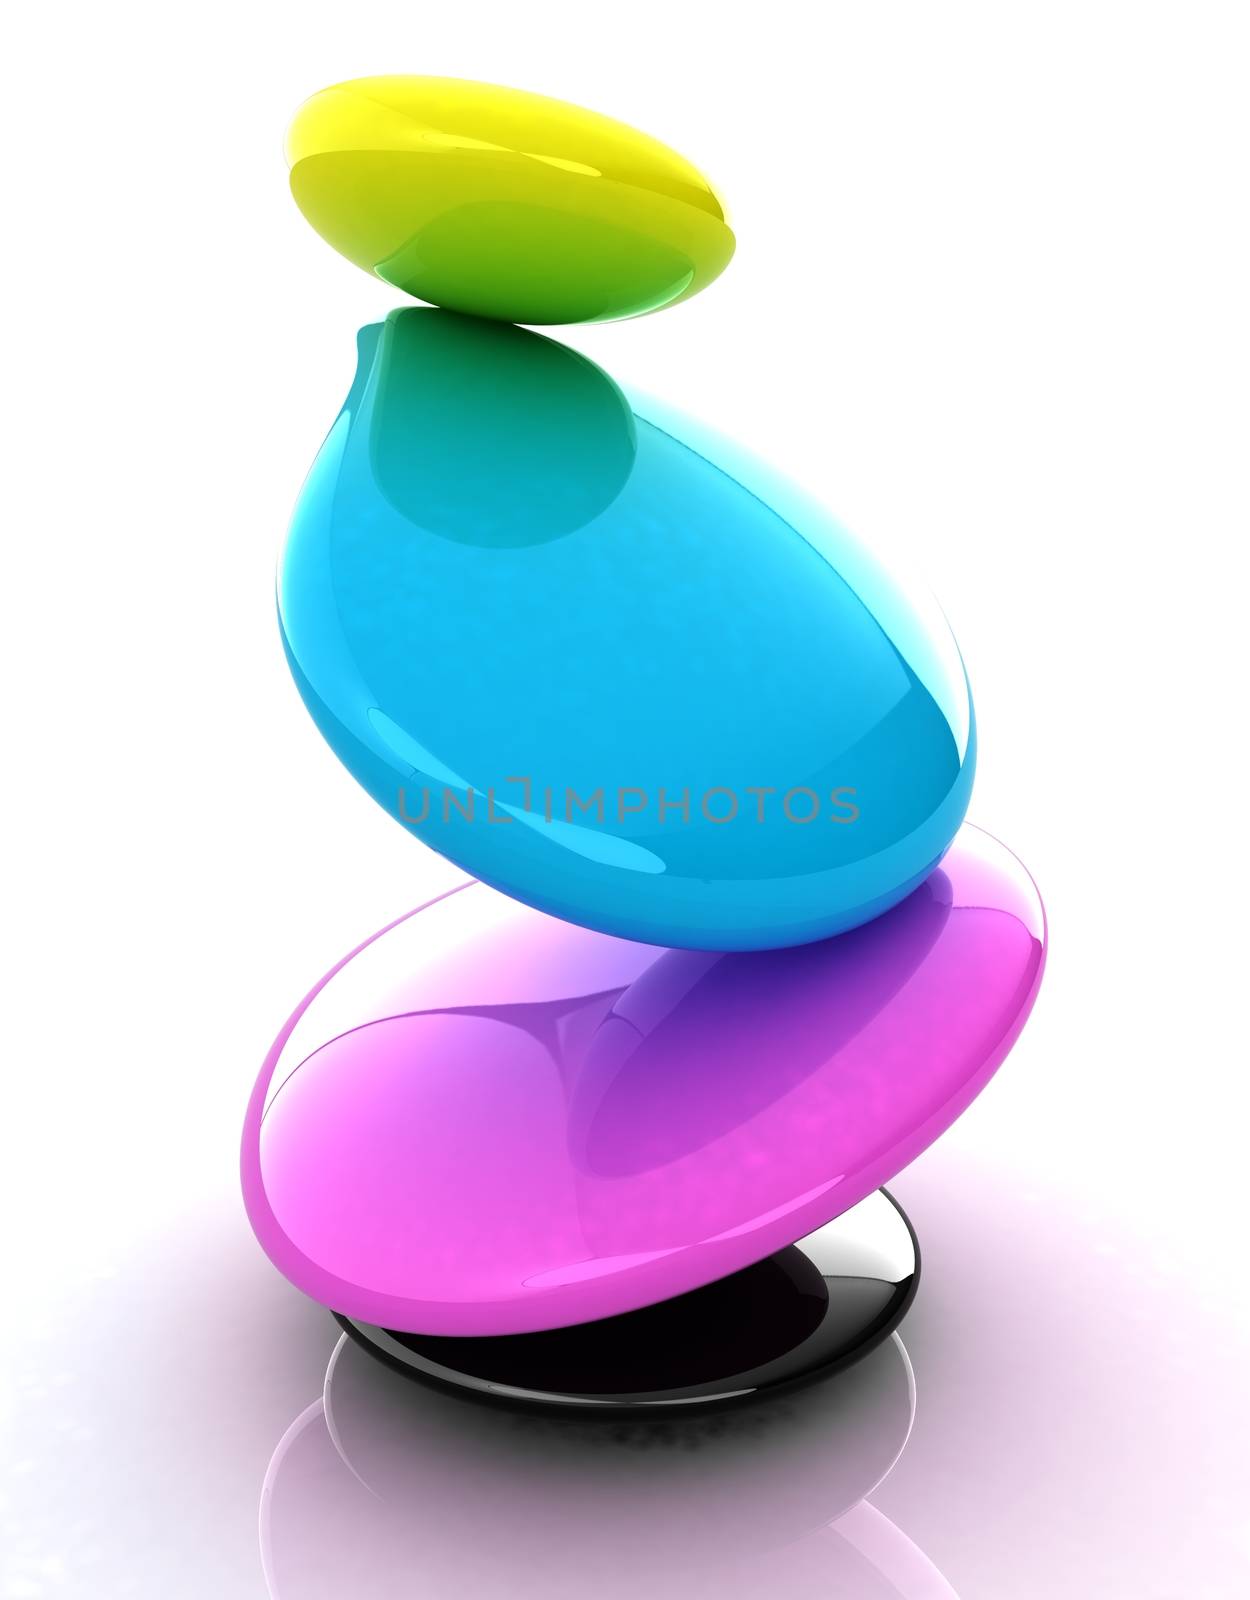 Colorfull spa stones. 3d icon